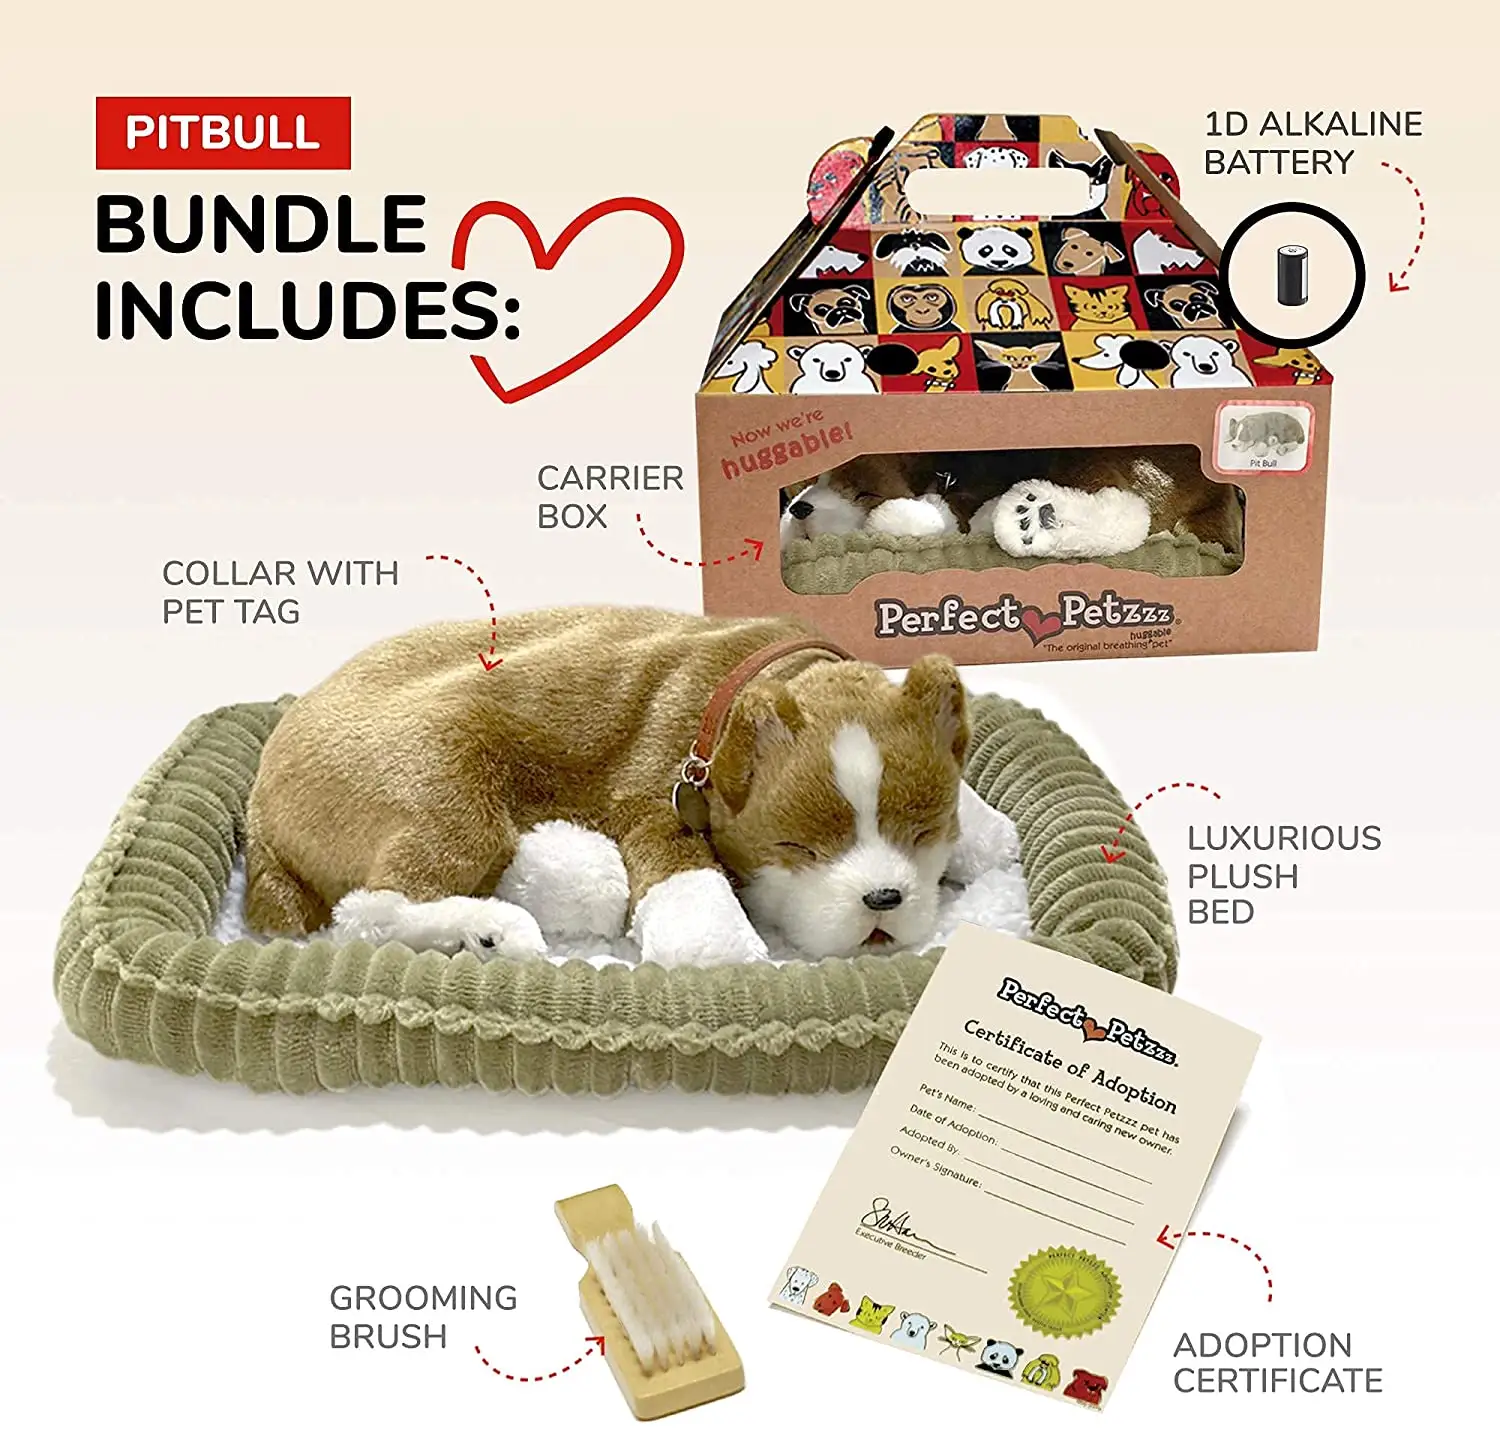 Perro de peluche interactivo realista para mascotas, juguete para mascotas, Pit Bull, 100% piel sintética hecha a mano